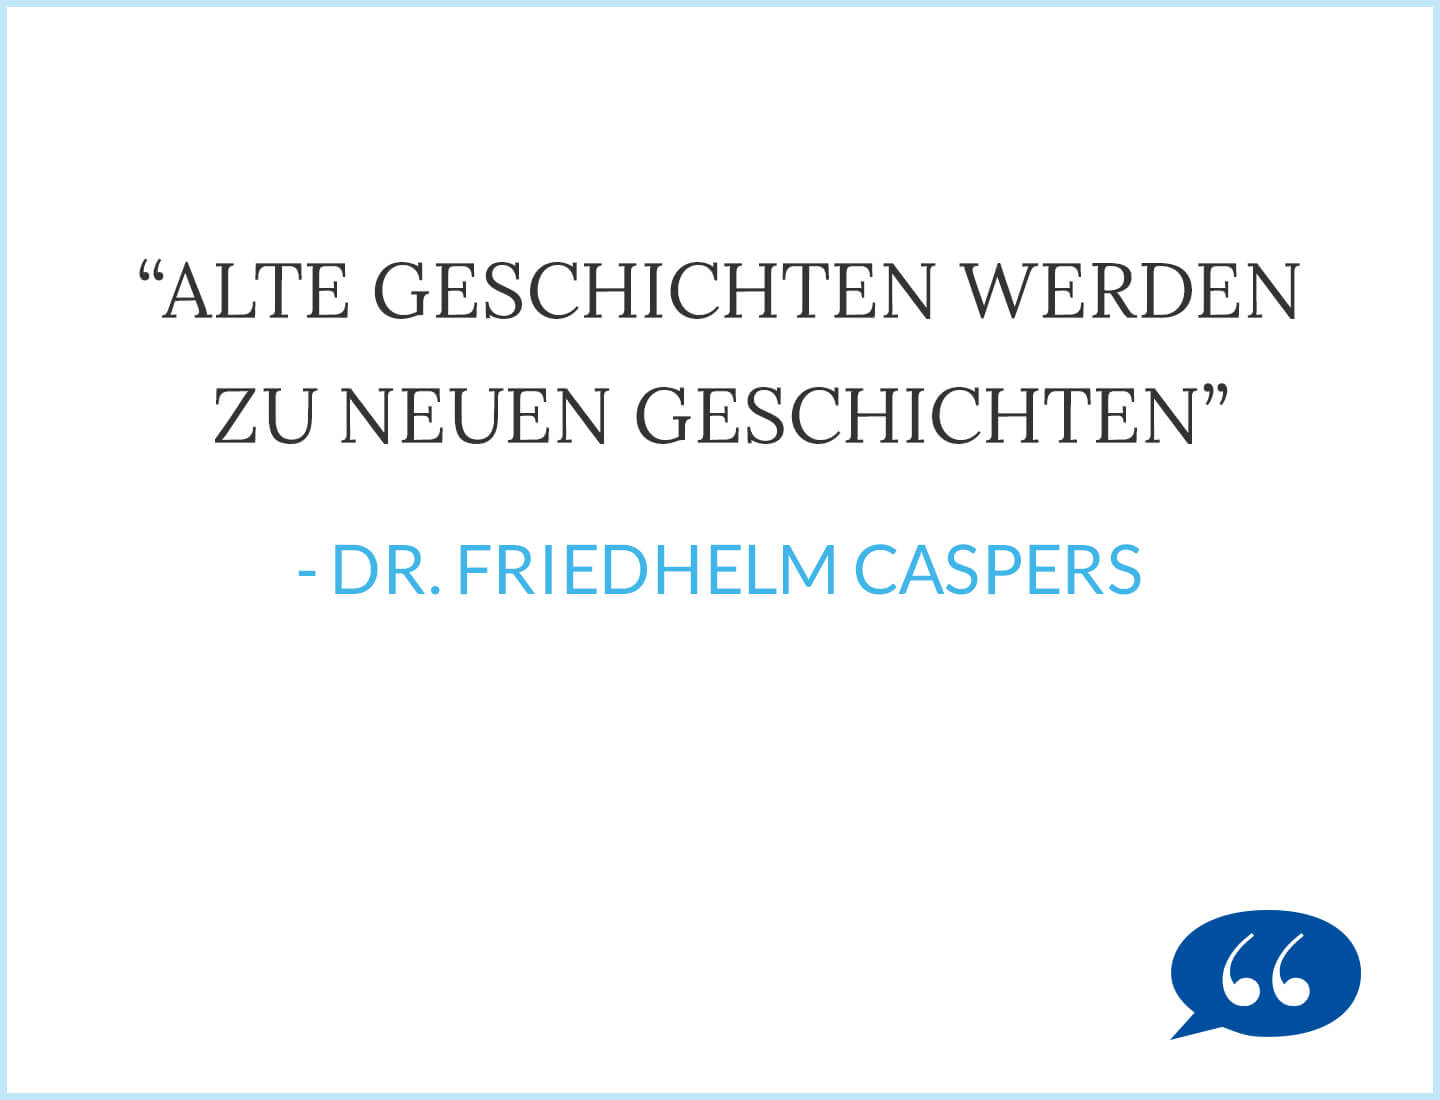 Alte Geschichten werden zu neuen Geschichten - Dr. Friedhelm Caspers